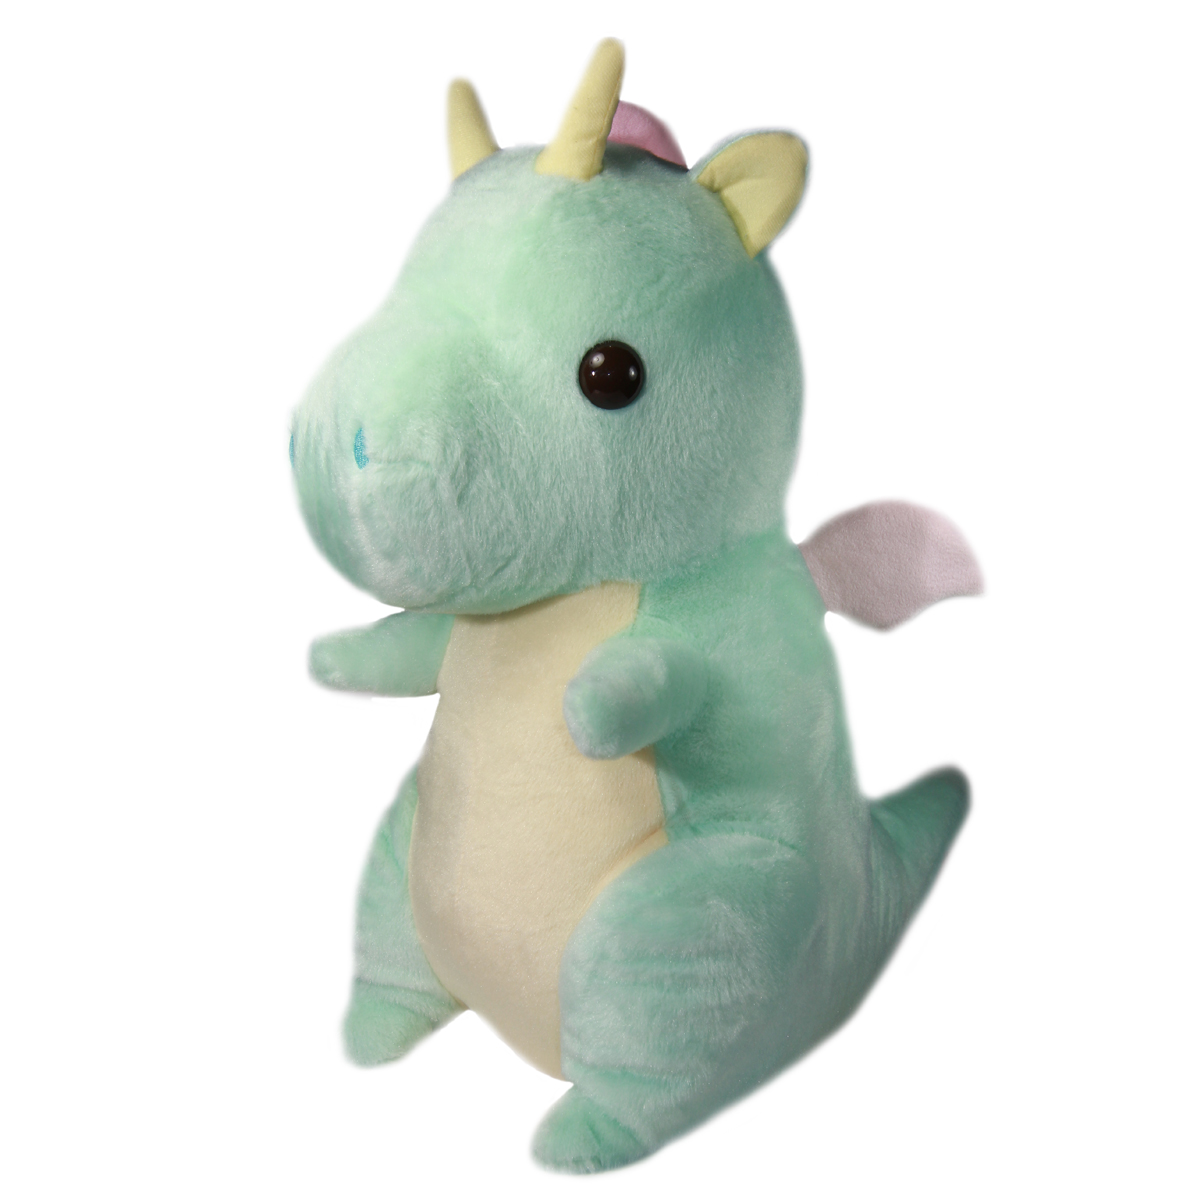 Fantasy Dragon Plushie Soft Stuffed Animal Toy Green BIG Size 18 Inches